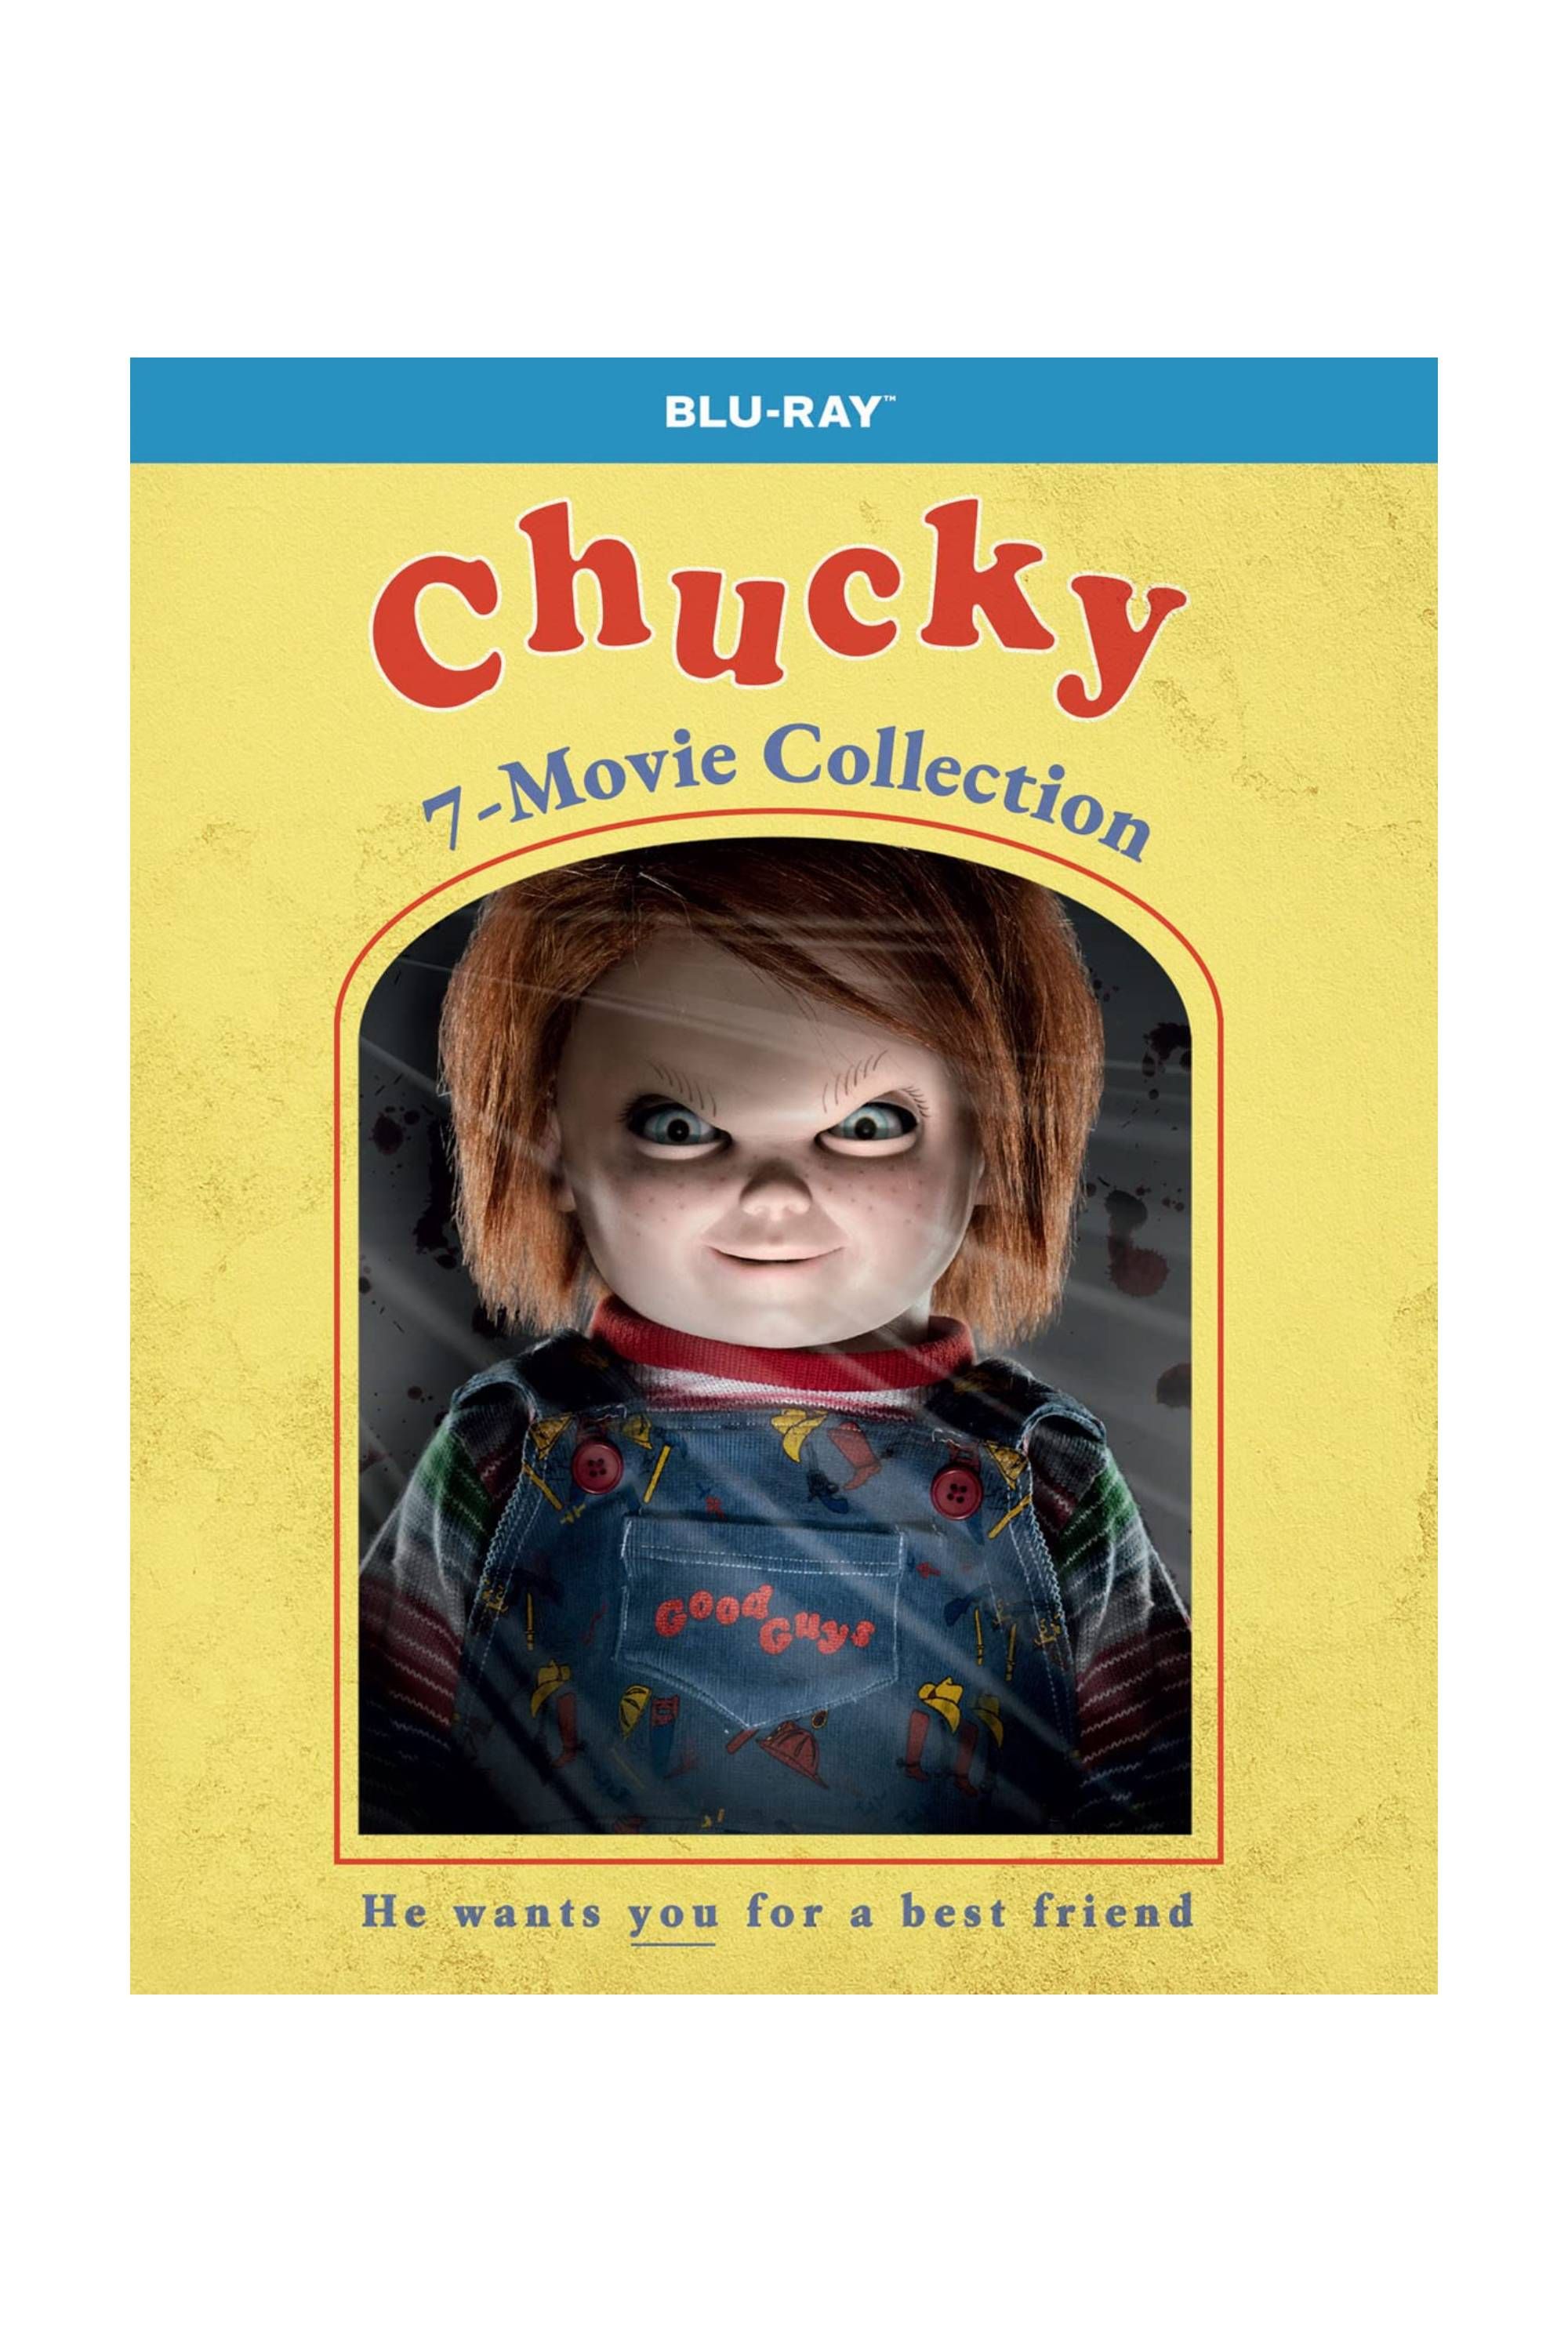 Chucky 7-Movie Collection Blu-ray